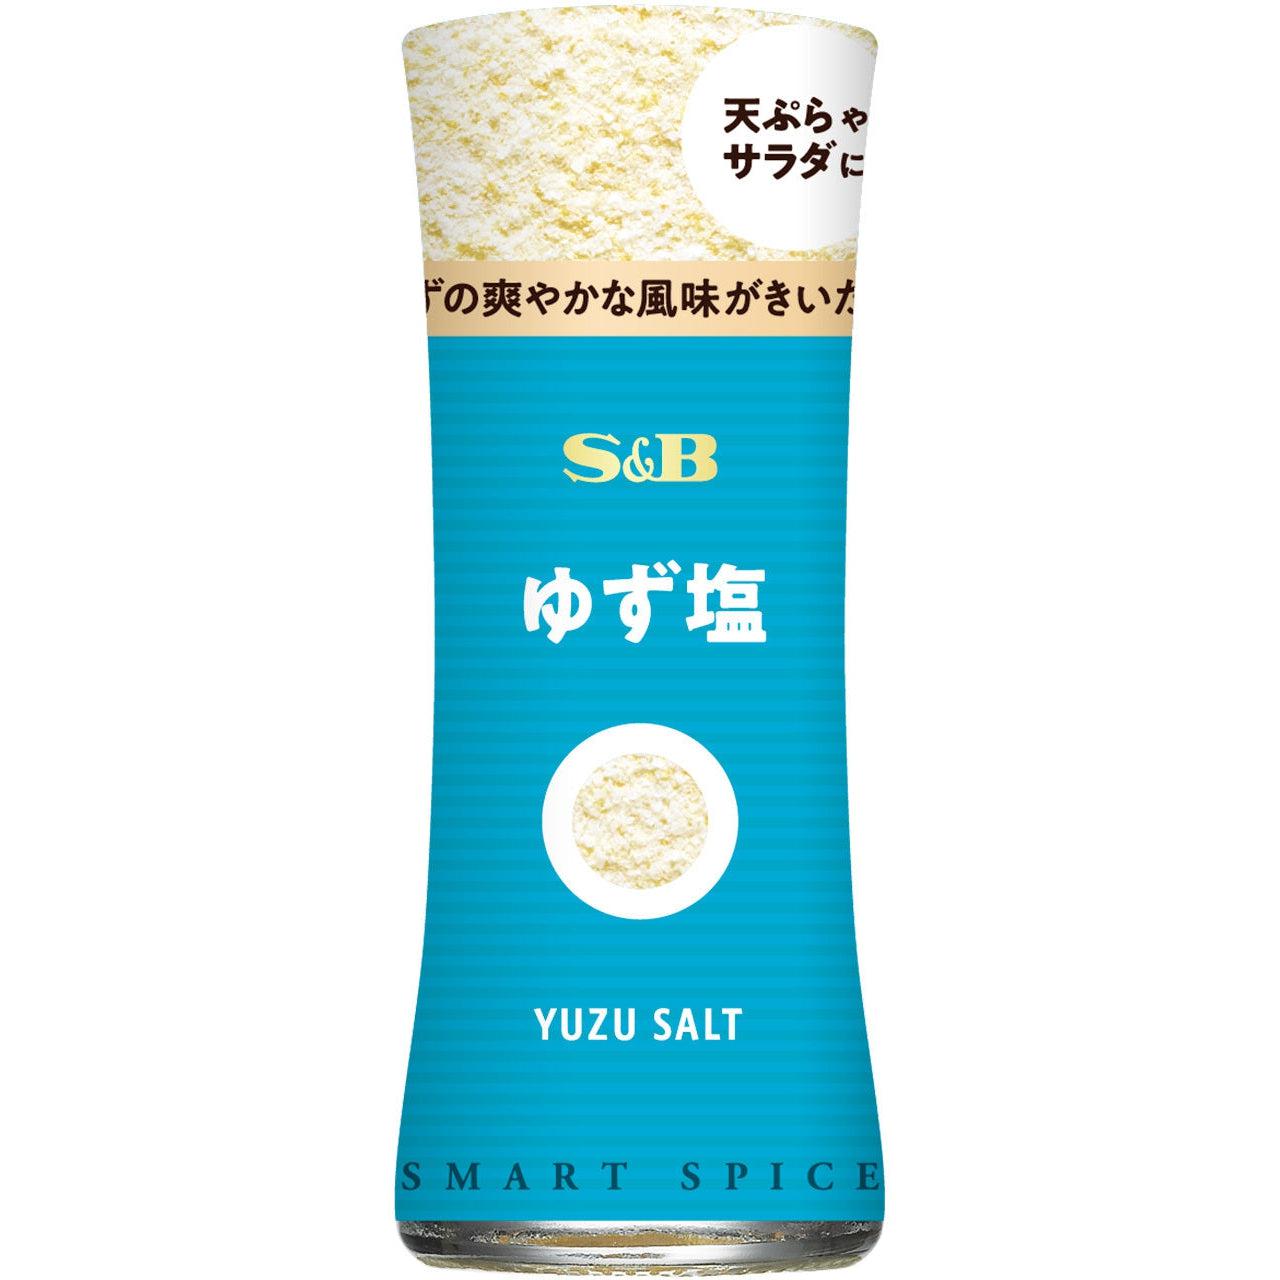 S&B Smart Spice Yuzu Citron Salt 16g